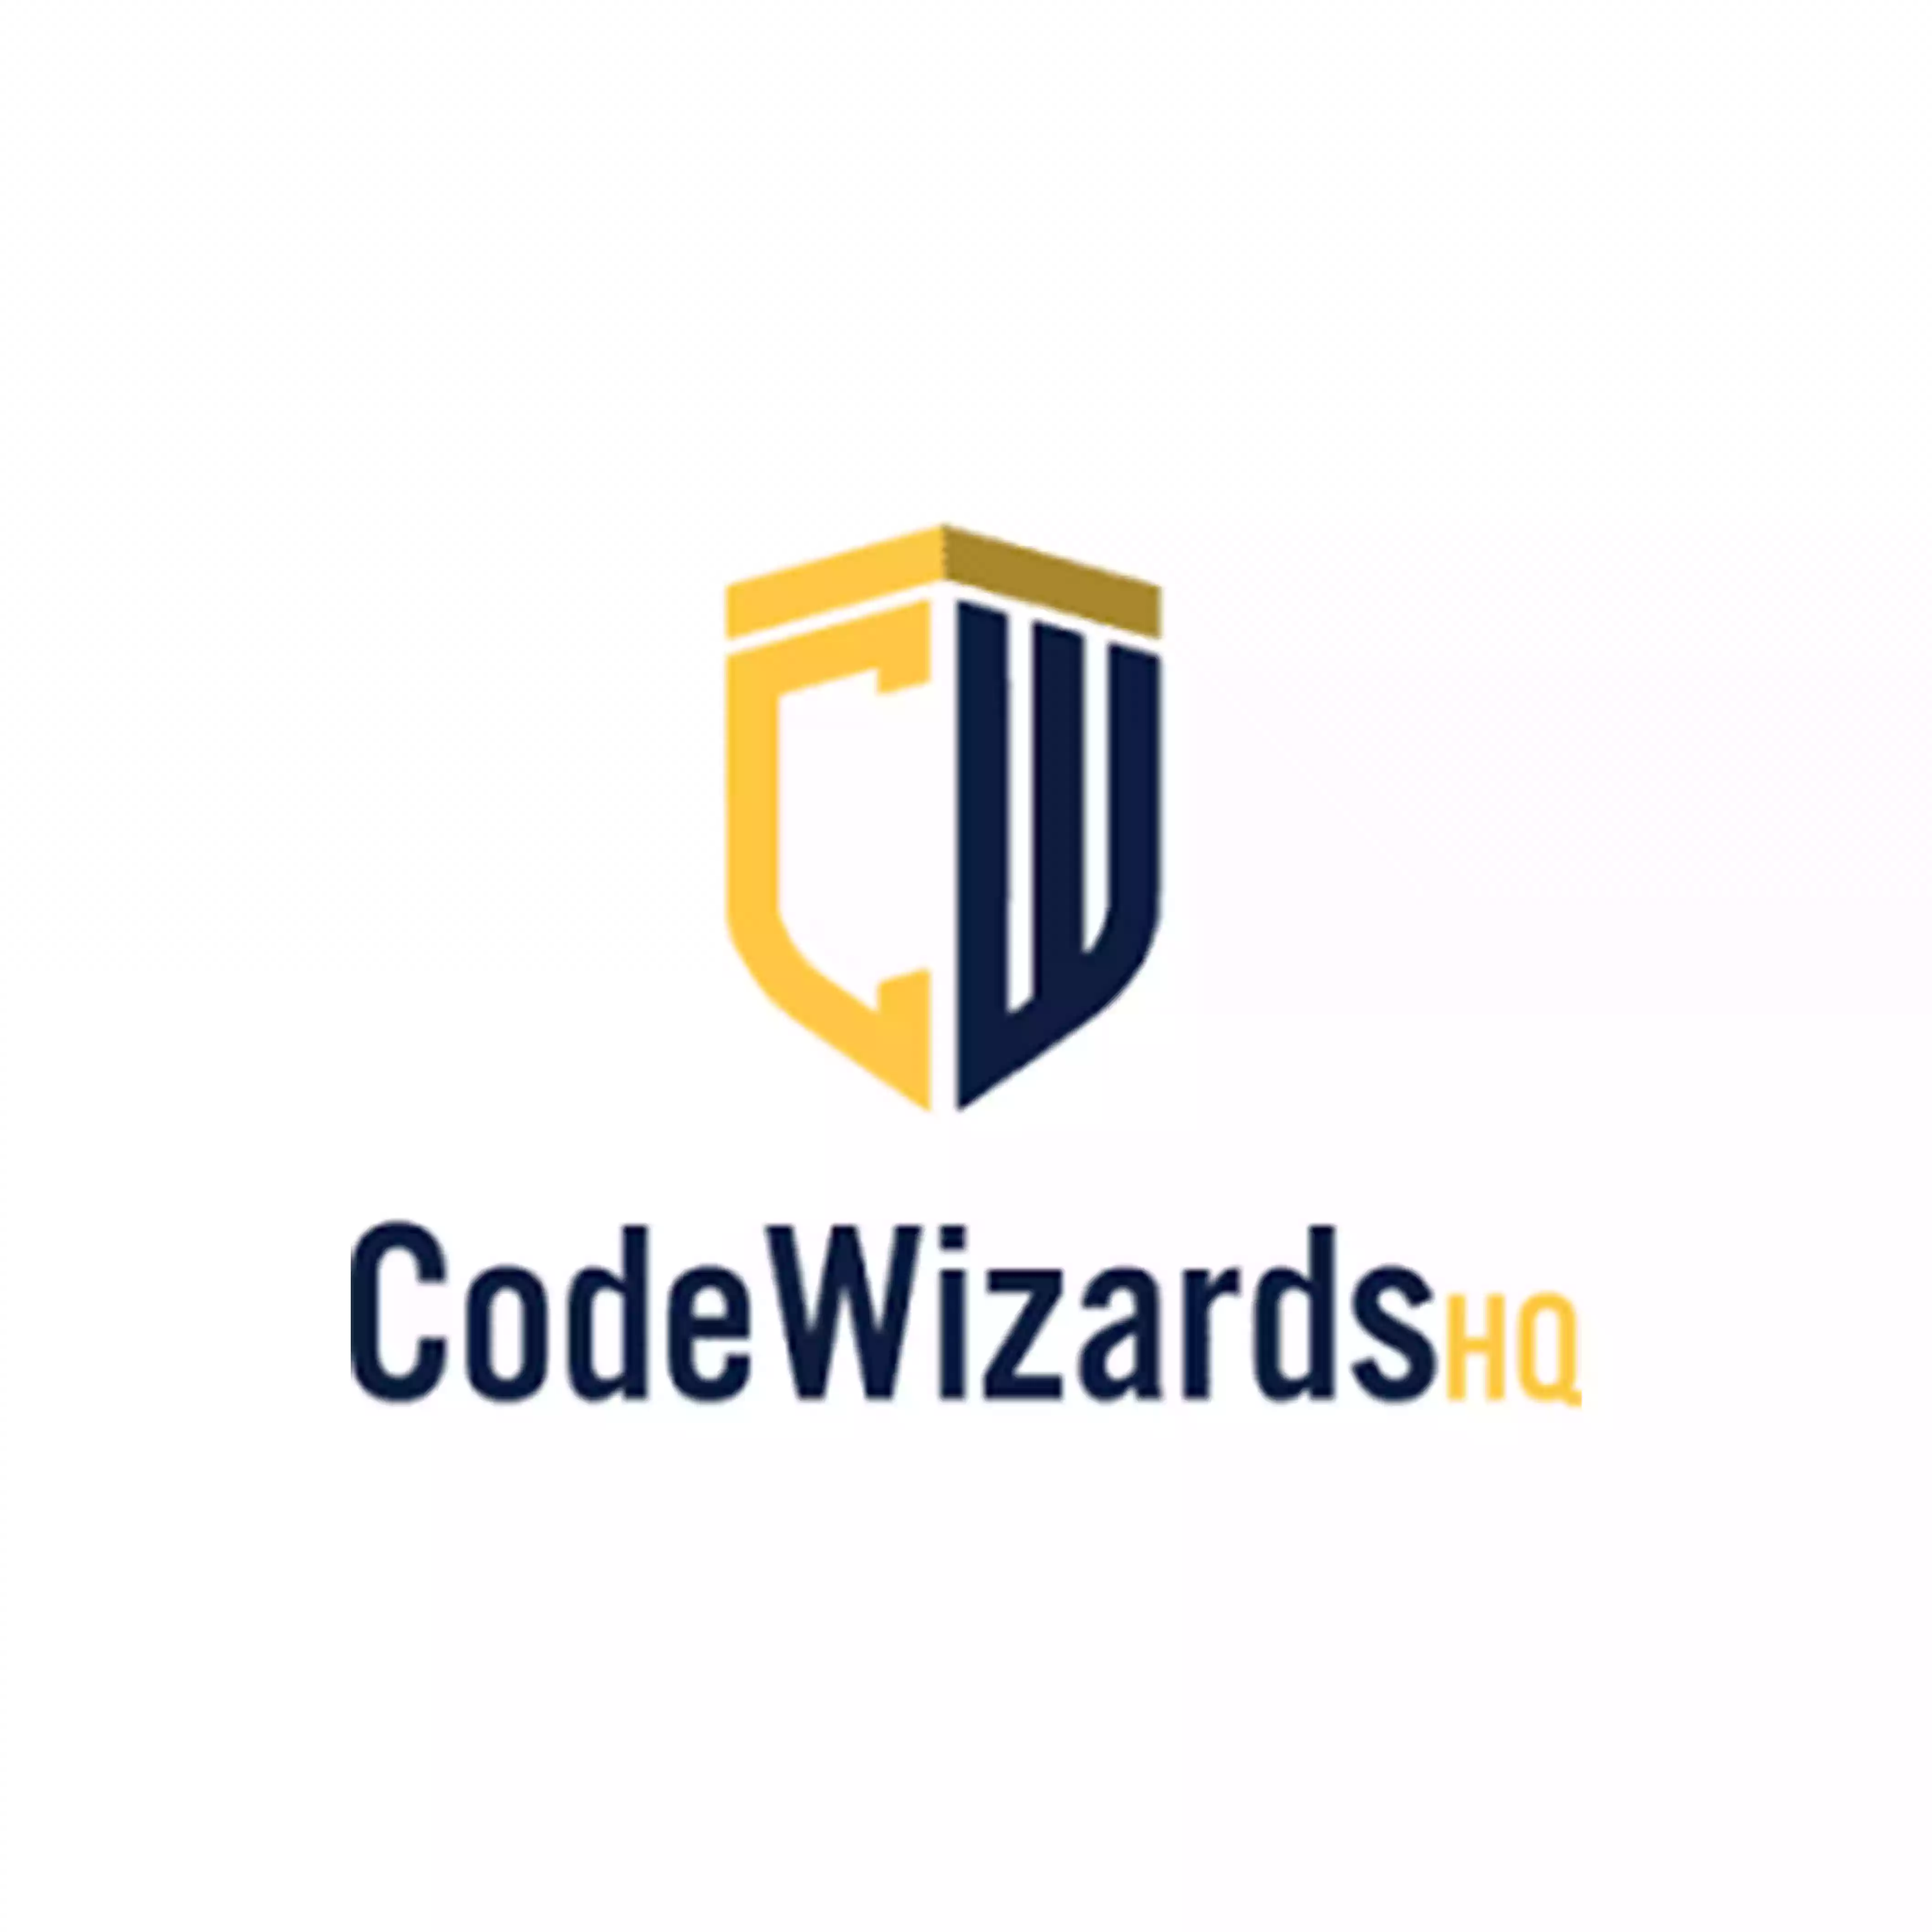 CodeWizardsHQ logo